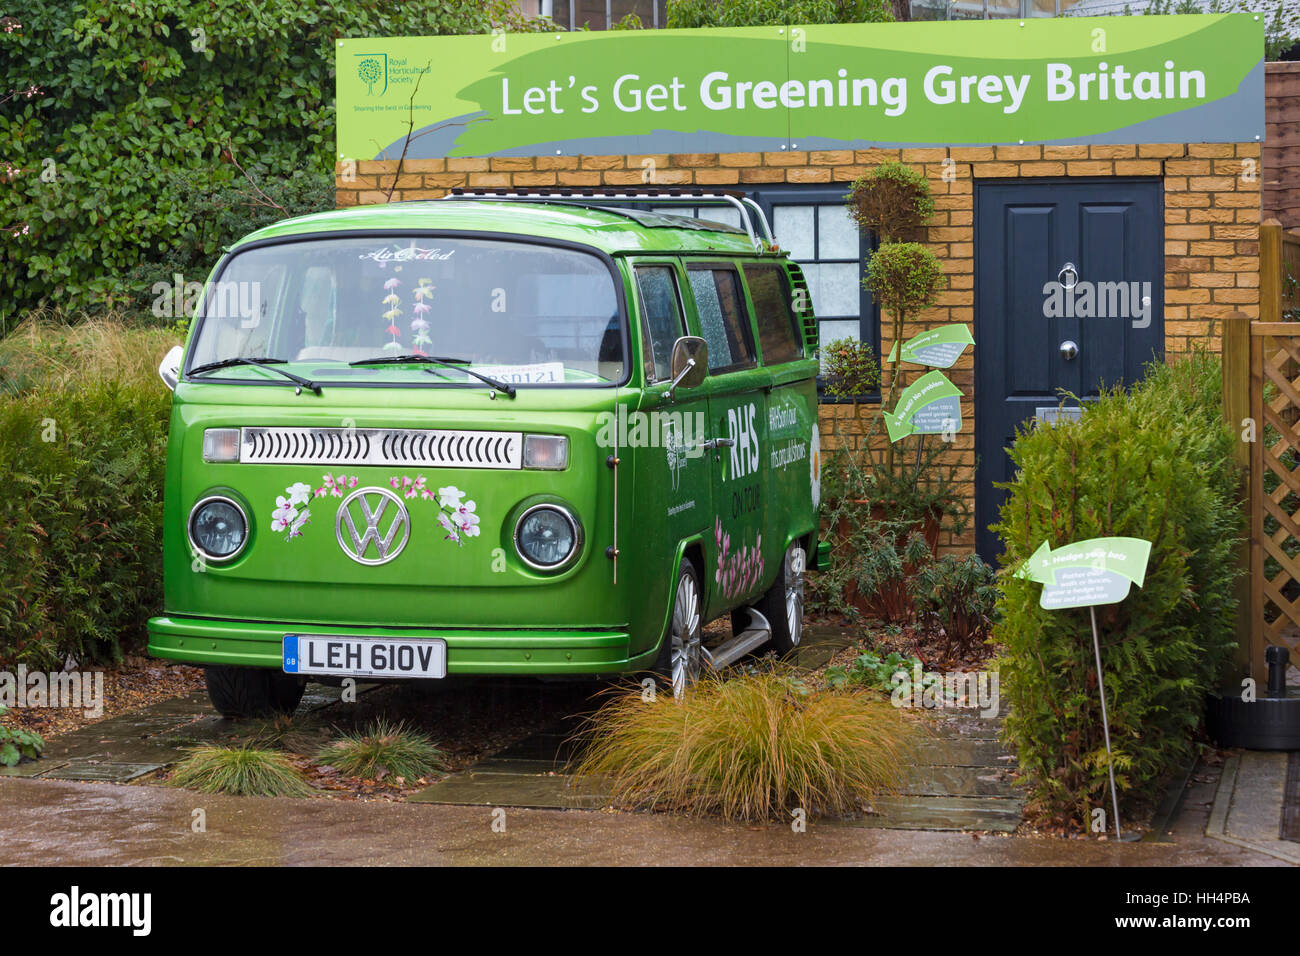 Let's Get Greening Grey Britain display with VW Campervan at RHS Garden Wisley, Woking, Surrey, UK in January - Volkswagen camper van Stock Photo